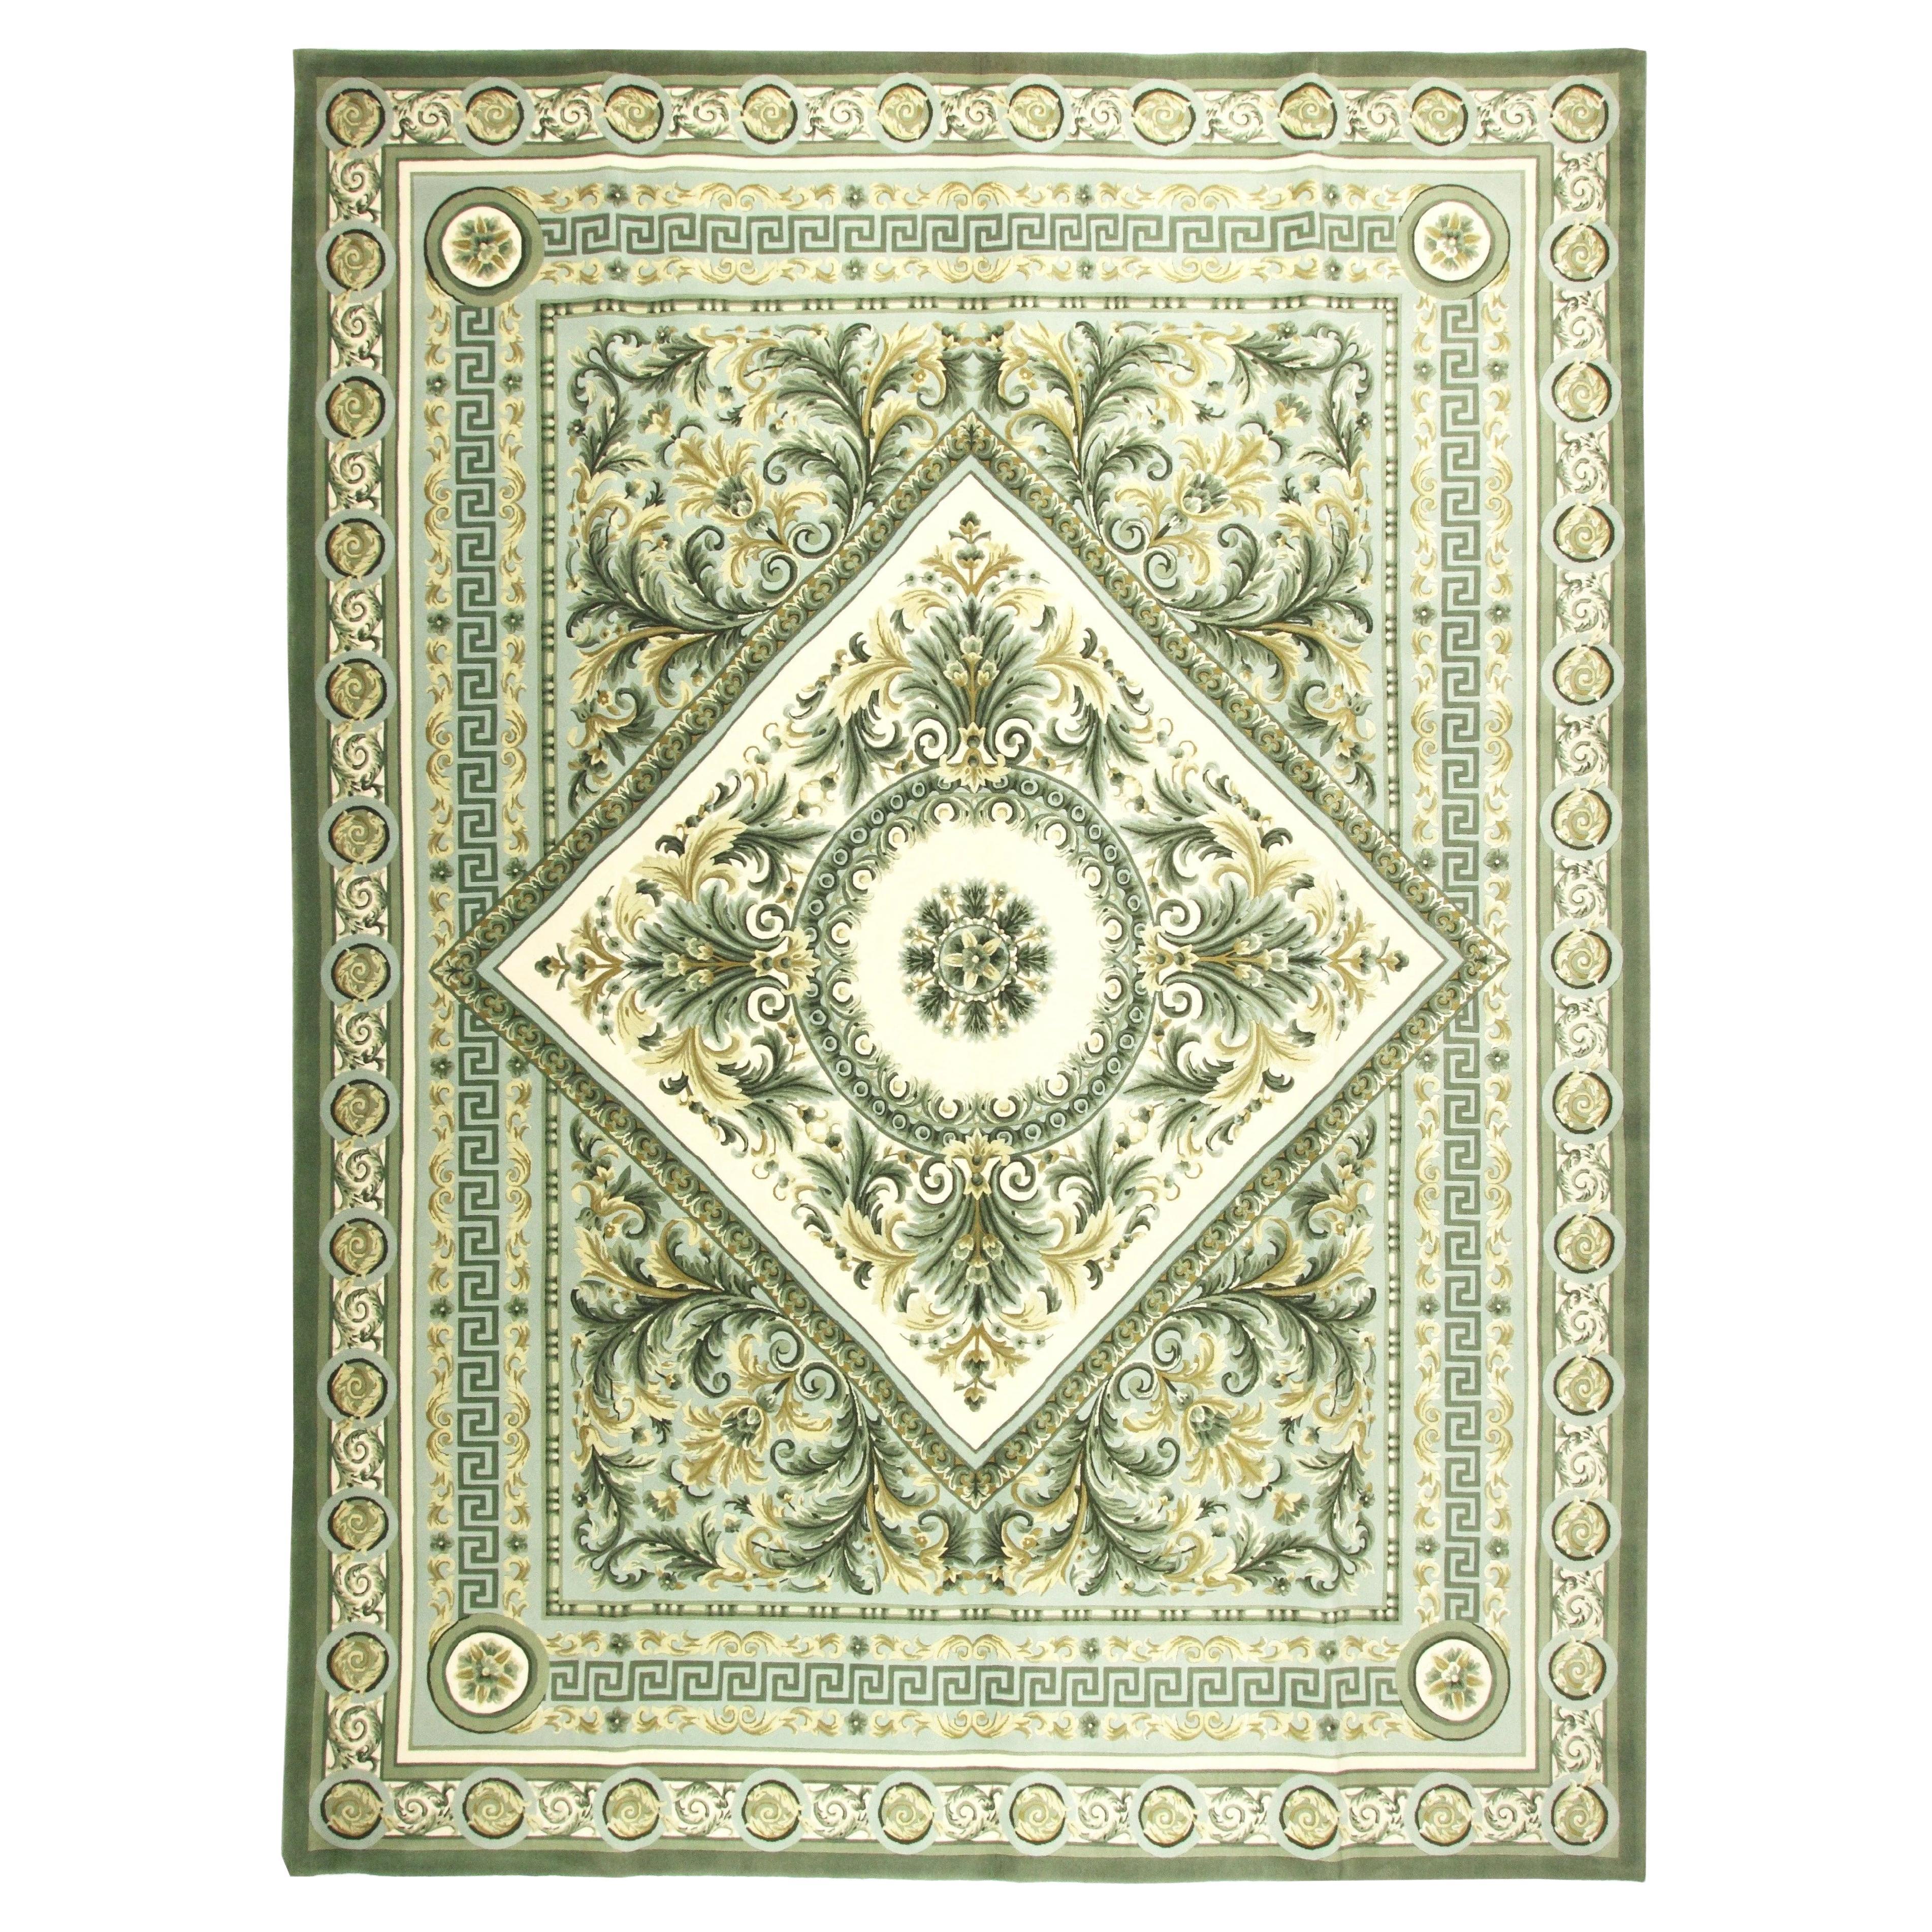 VIA COMO 'Cirano' HandKnotted Carpet Rug Wool & Silk 10x13 ft One of a Kind RARE